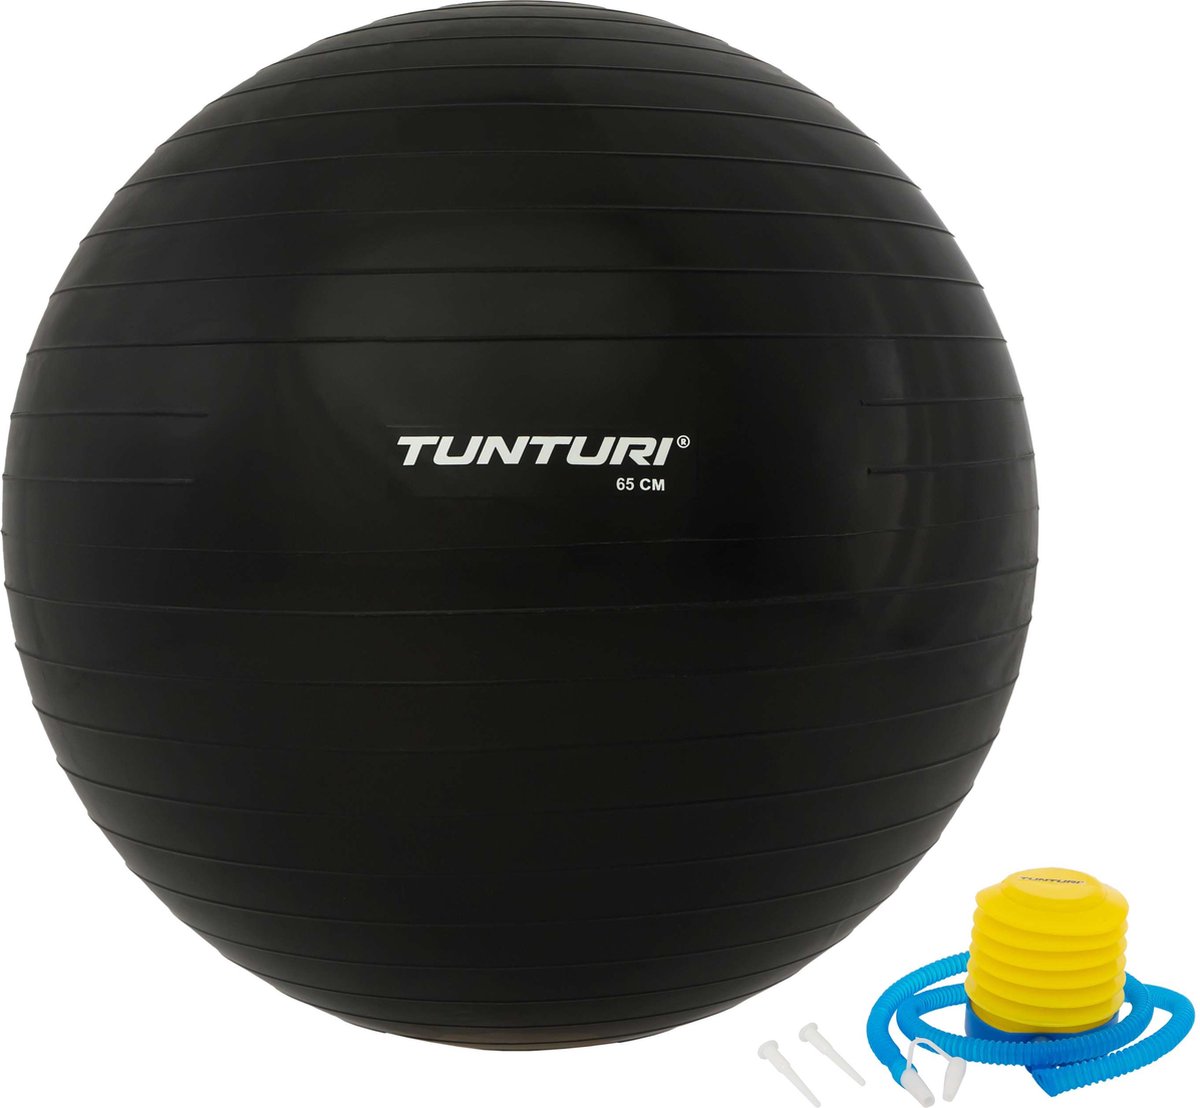 Tunturi Fitness bal - Yoga bal inclusief pomp - Pilates bal - Zwangerschaps bal - 65 cm - kleur: Zwart - Incl. gratis fitness app - Tunturi